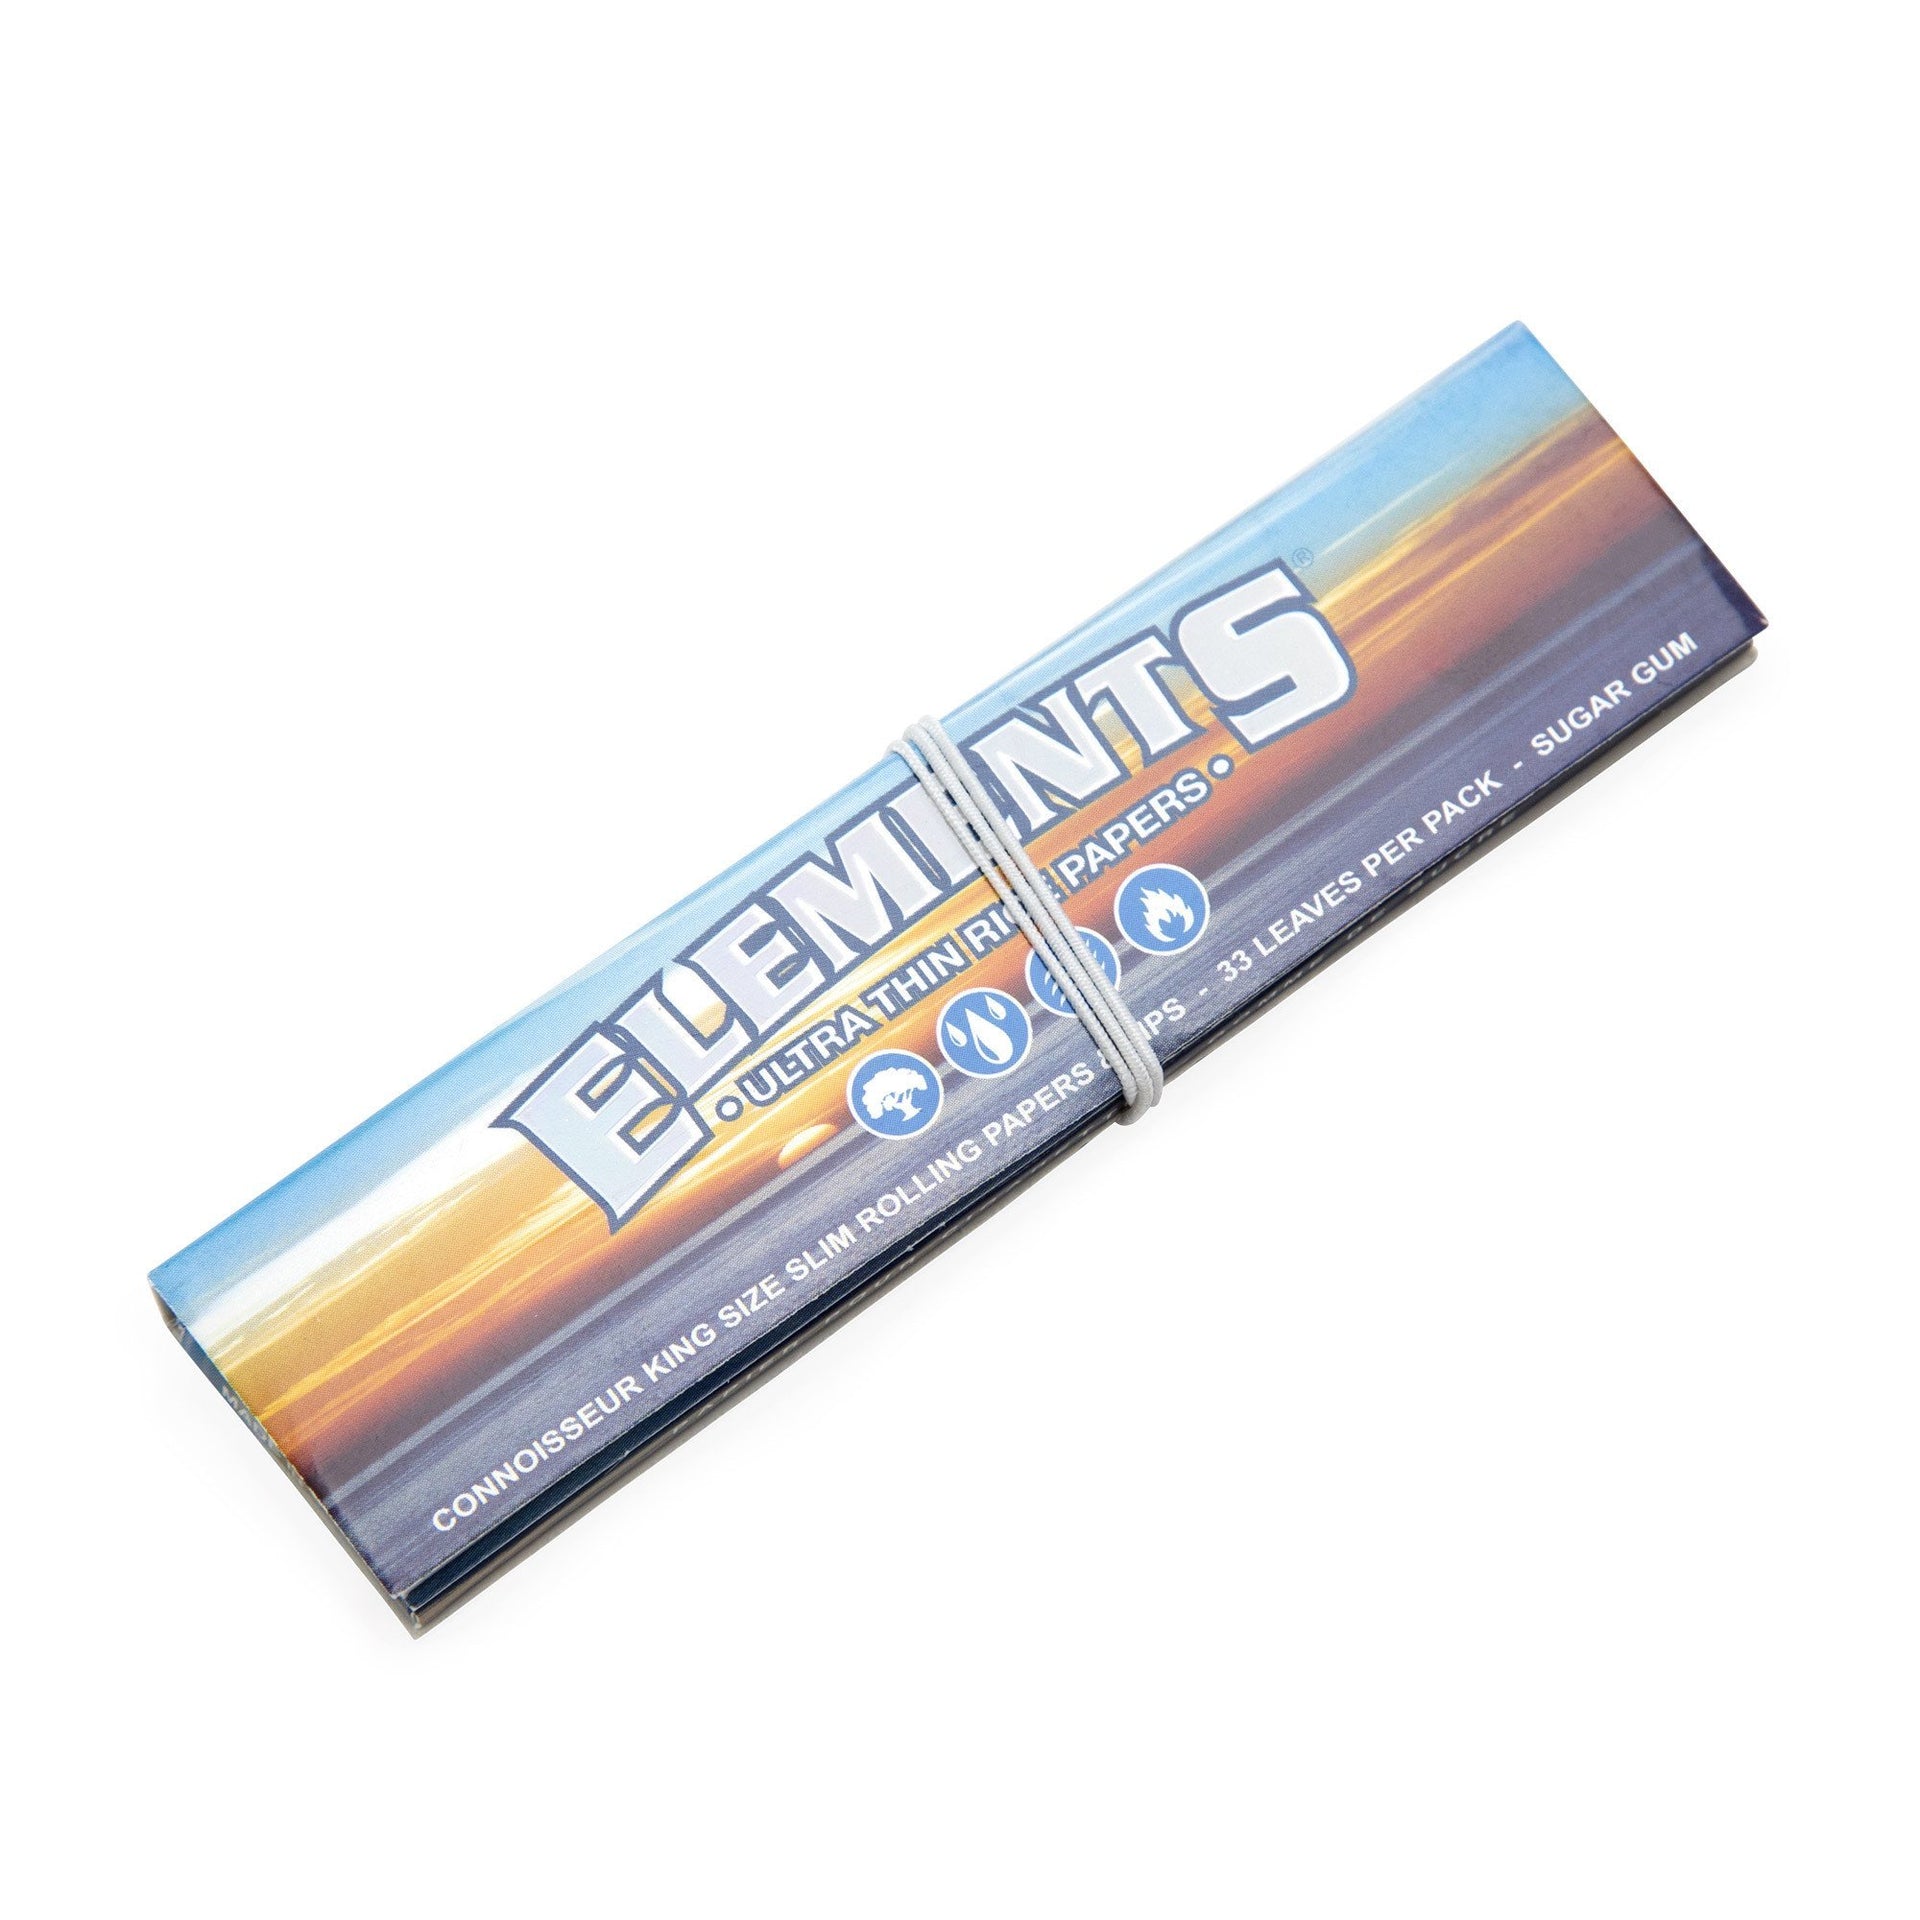 Elements Cigarette Rolling Papers - King Size - Shag Alternative